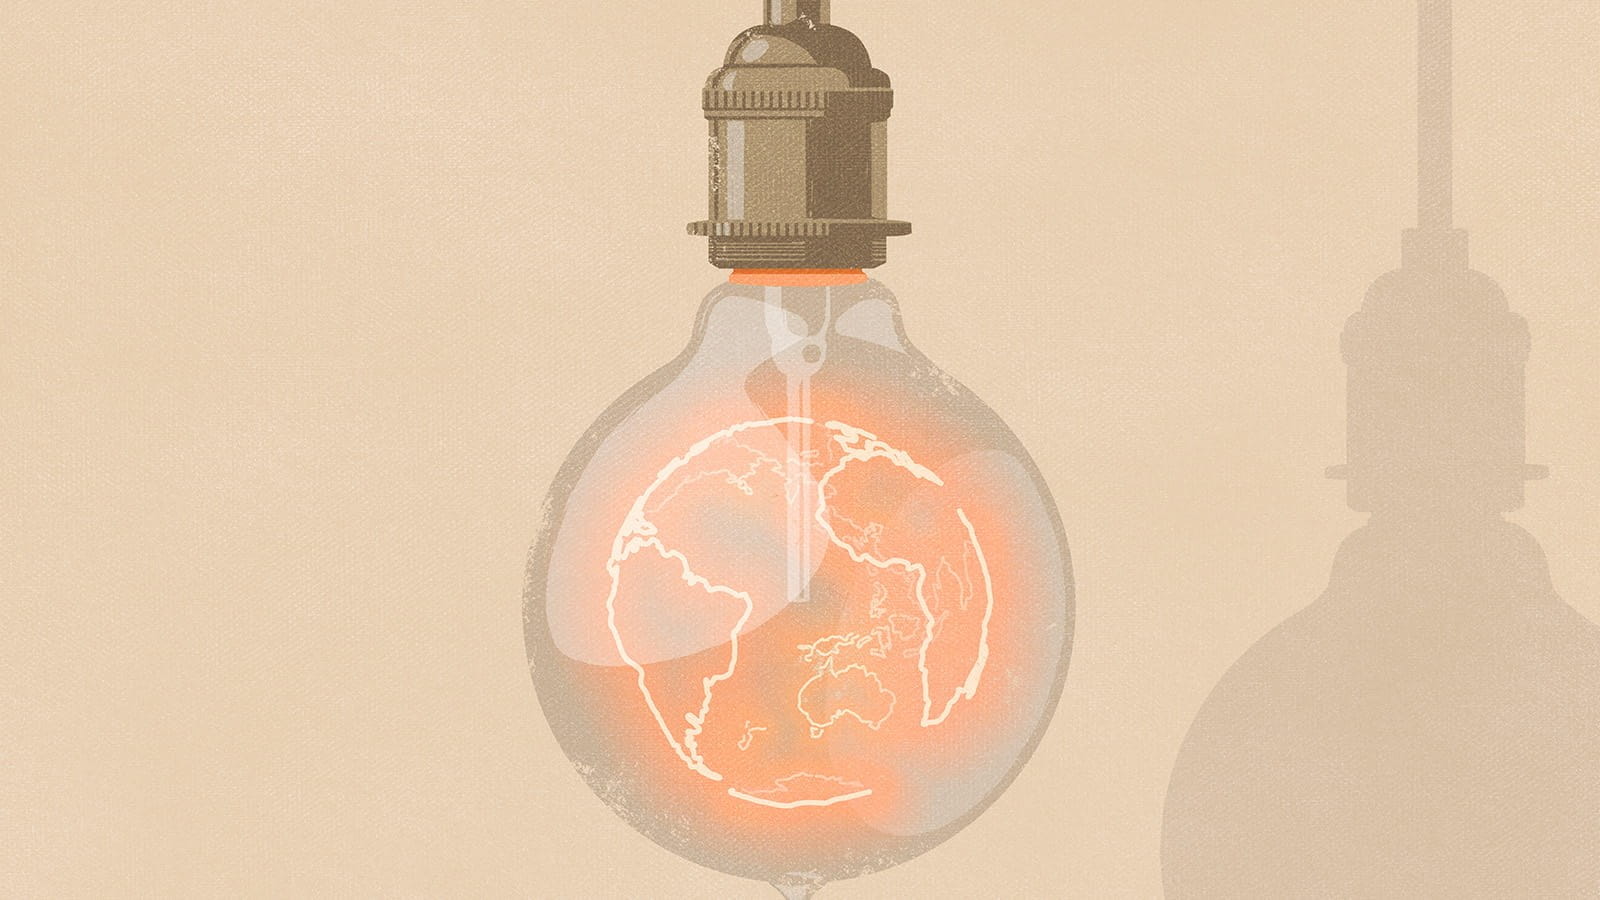 Lightbulb with image of a globe inside it